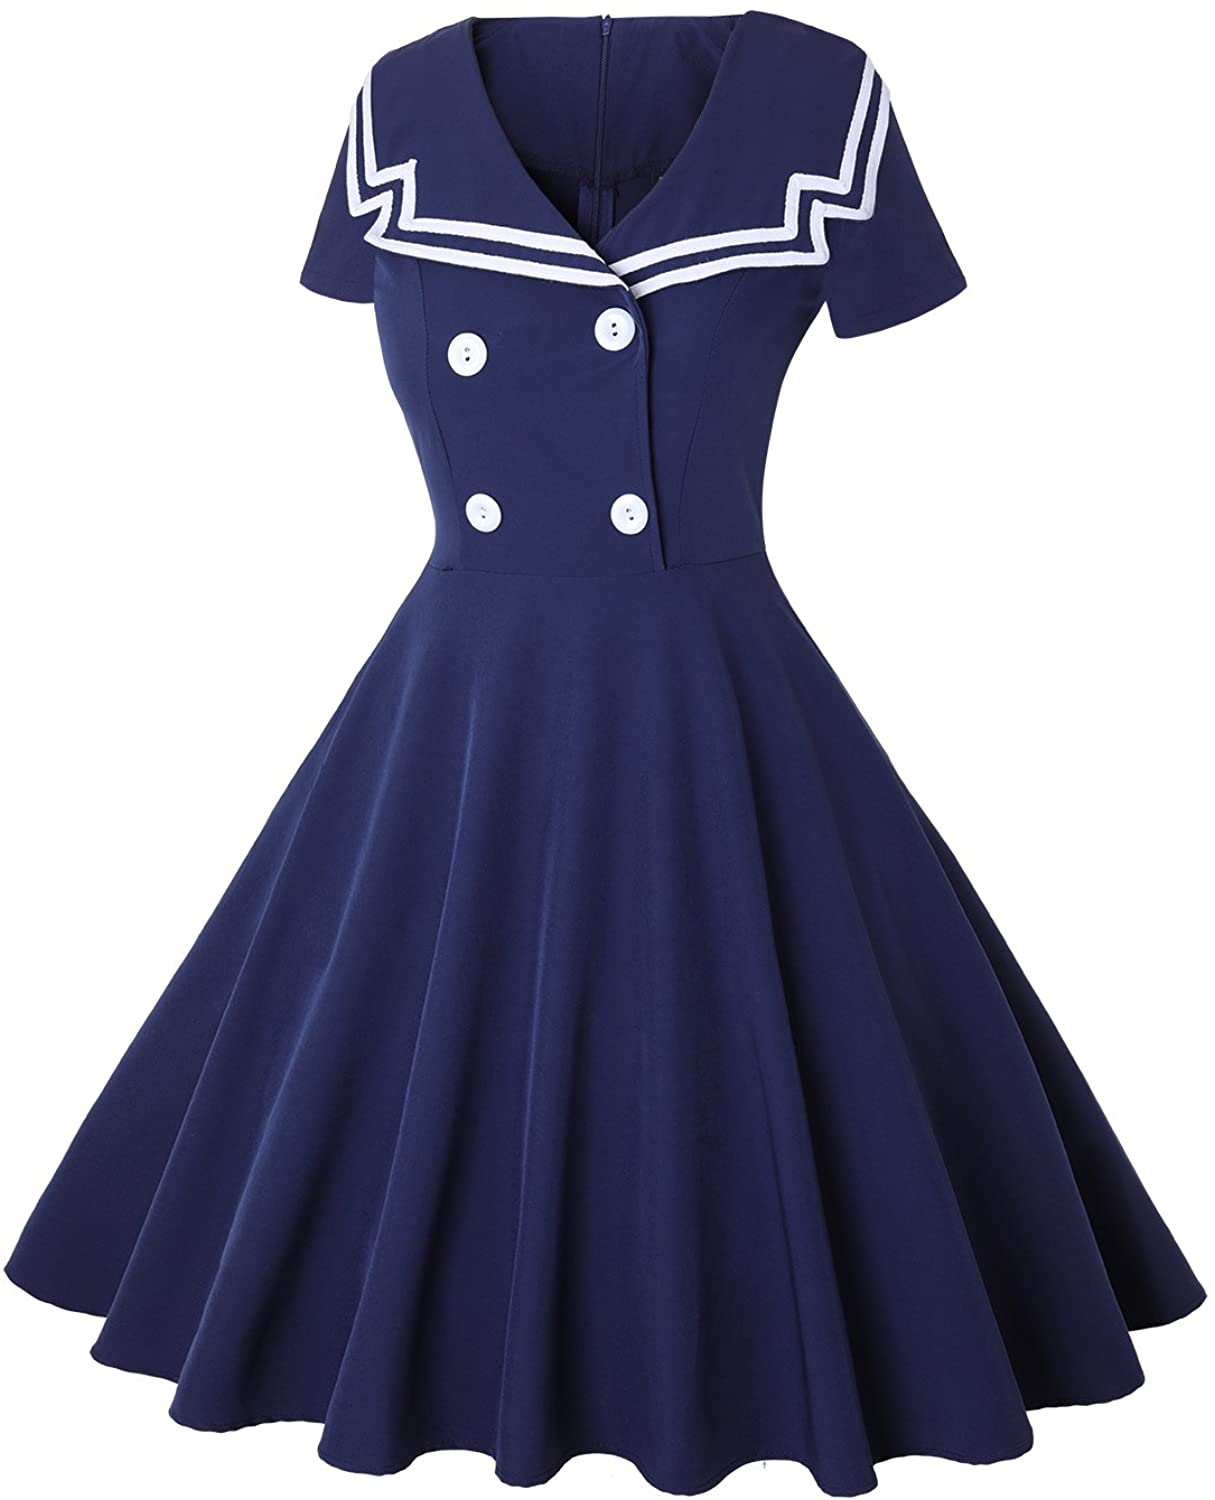 MISSJOY Halloween Sailor Dress for Women Fit and Flare Uniform Skirt ...